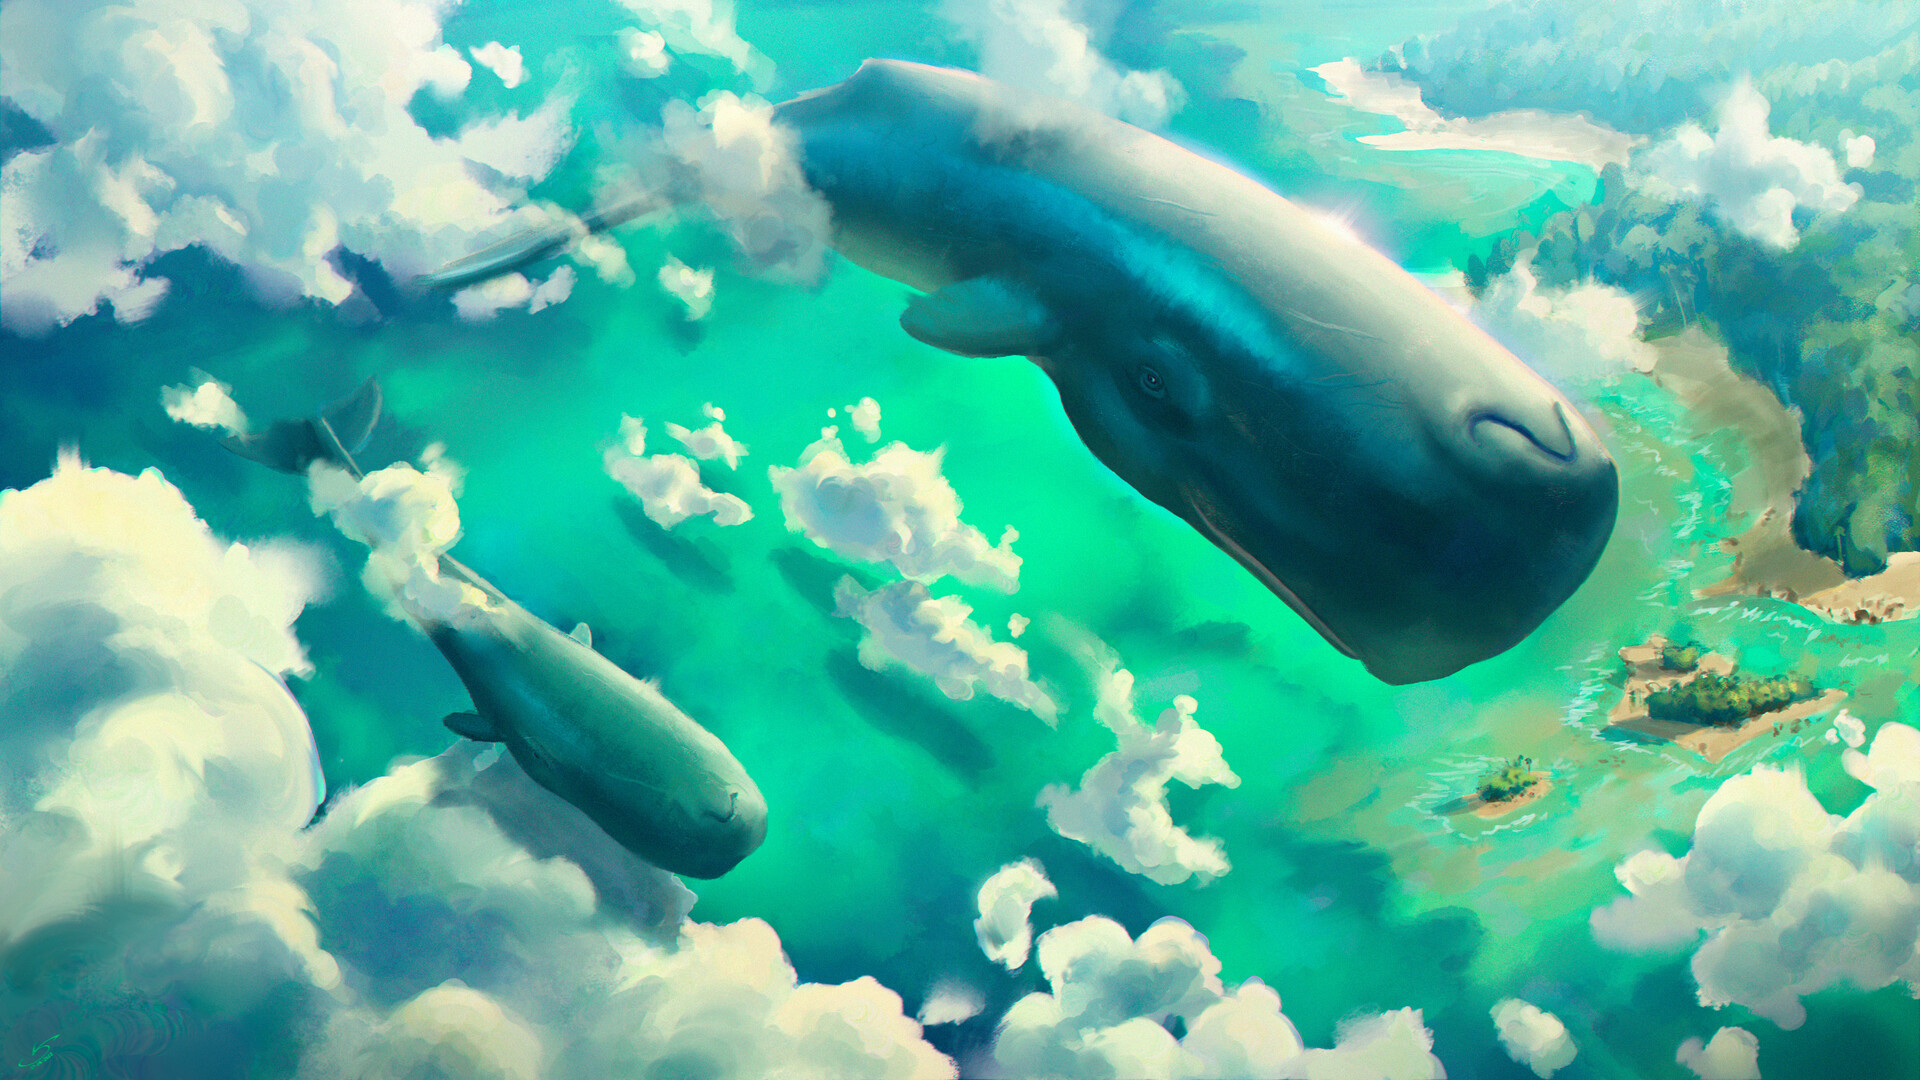 Victor Sales Digital Art Fantasy Art ArtStation Whale Sky Clouds Island Animals Water 1920x1080